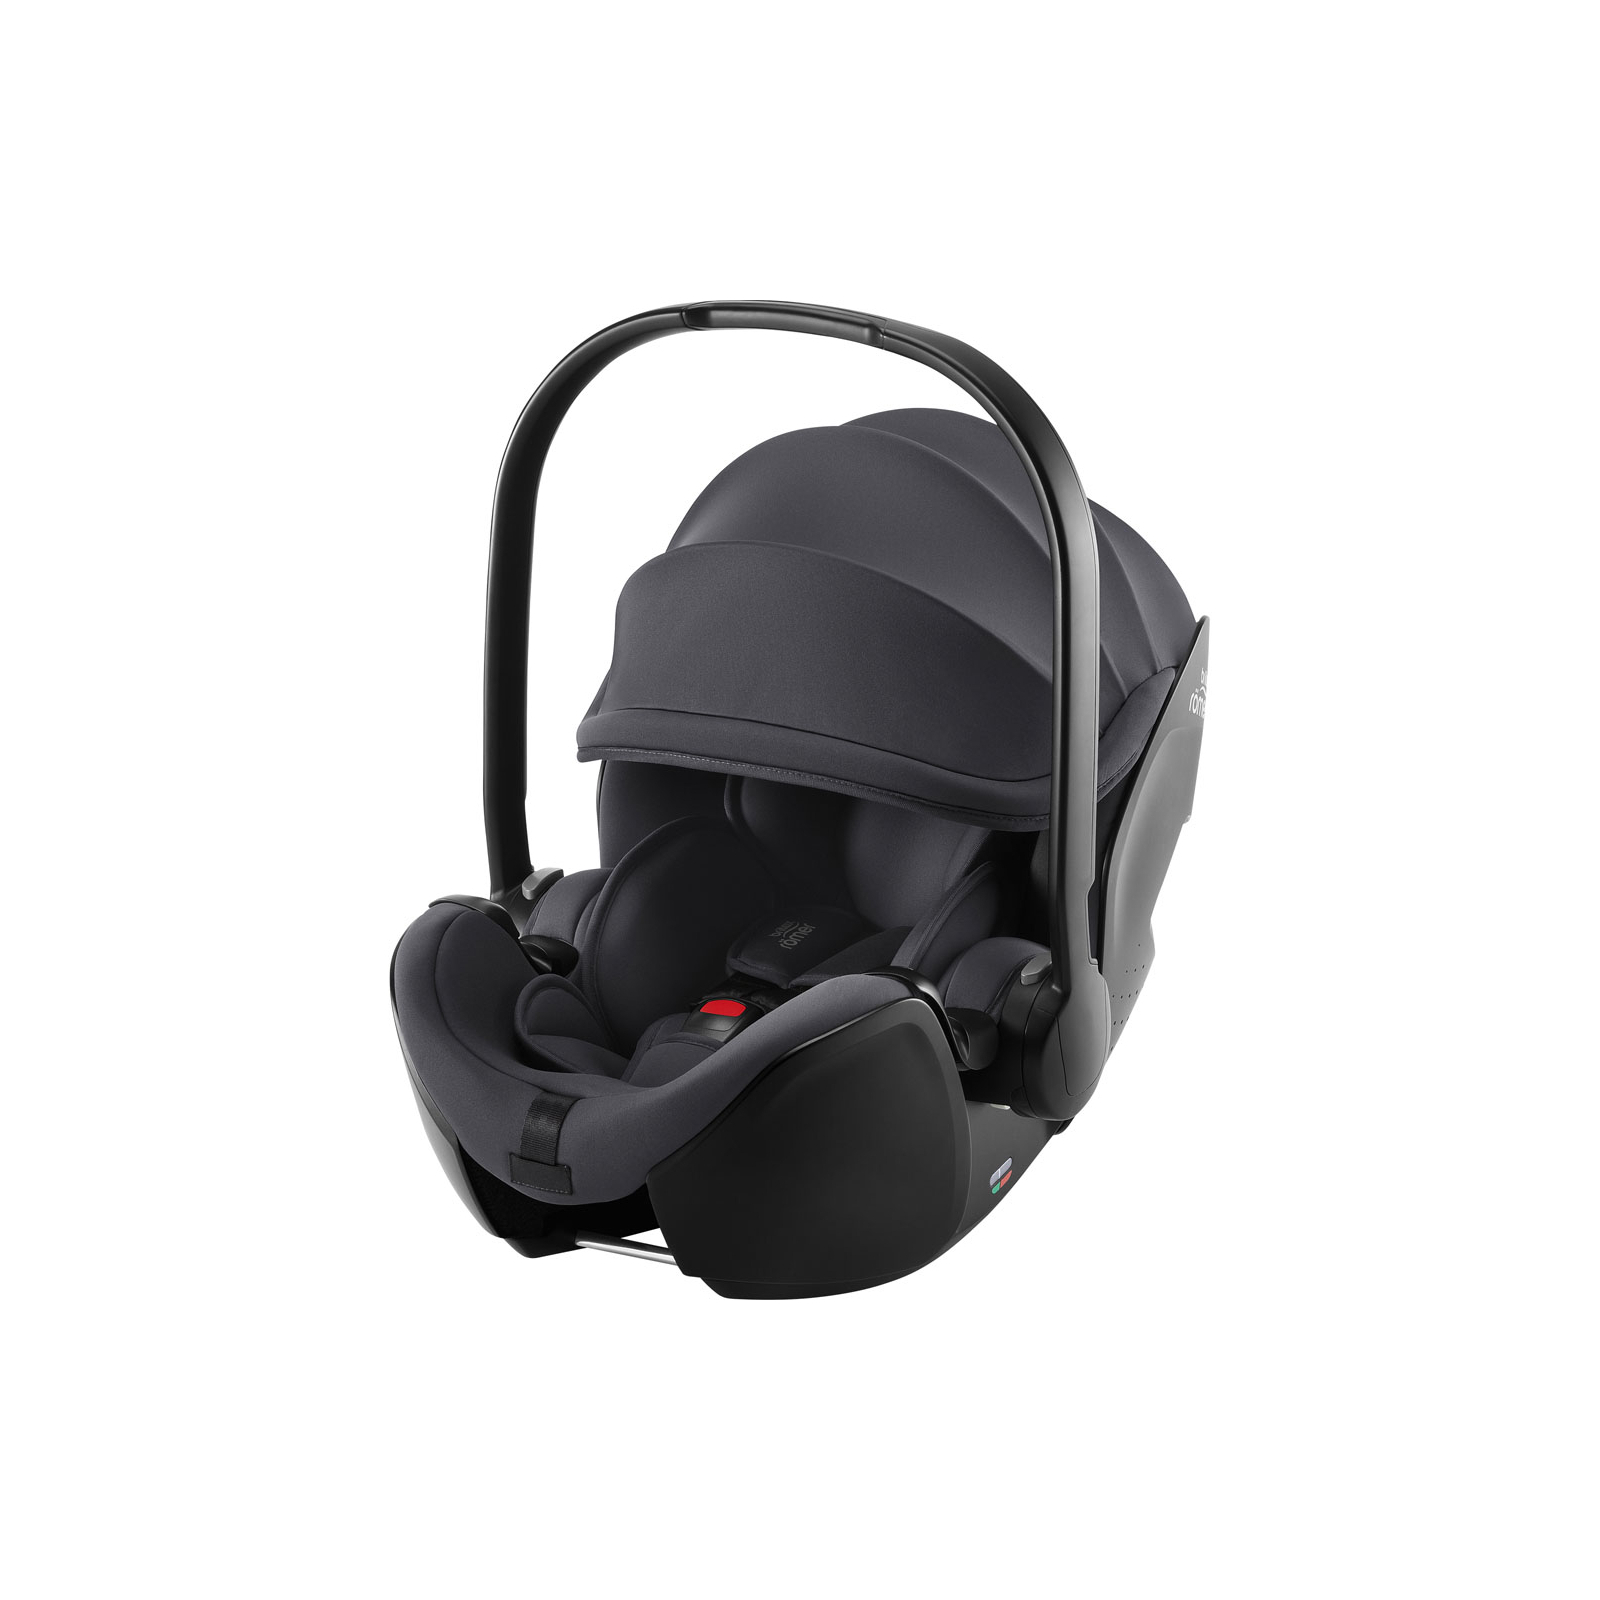 Автокресло Britax-Romer Baby-Safe Pro (Space Black) (2000040135)